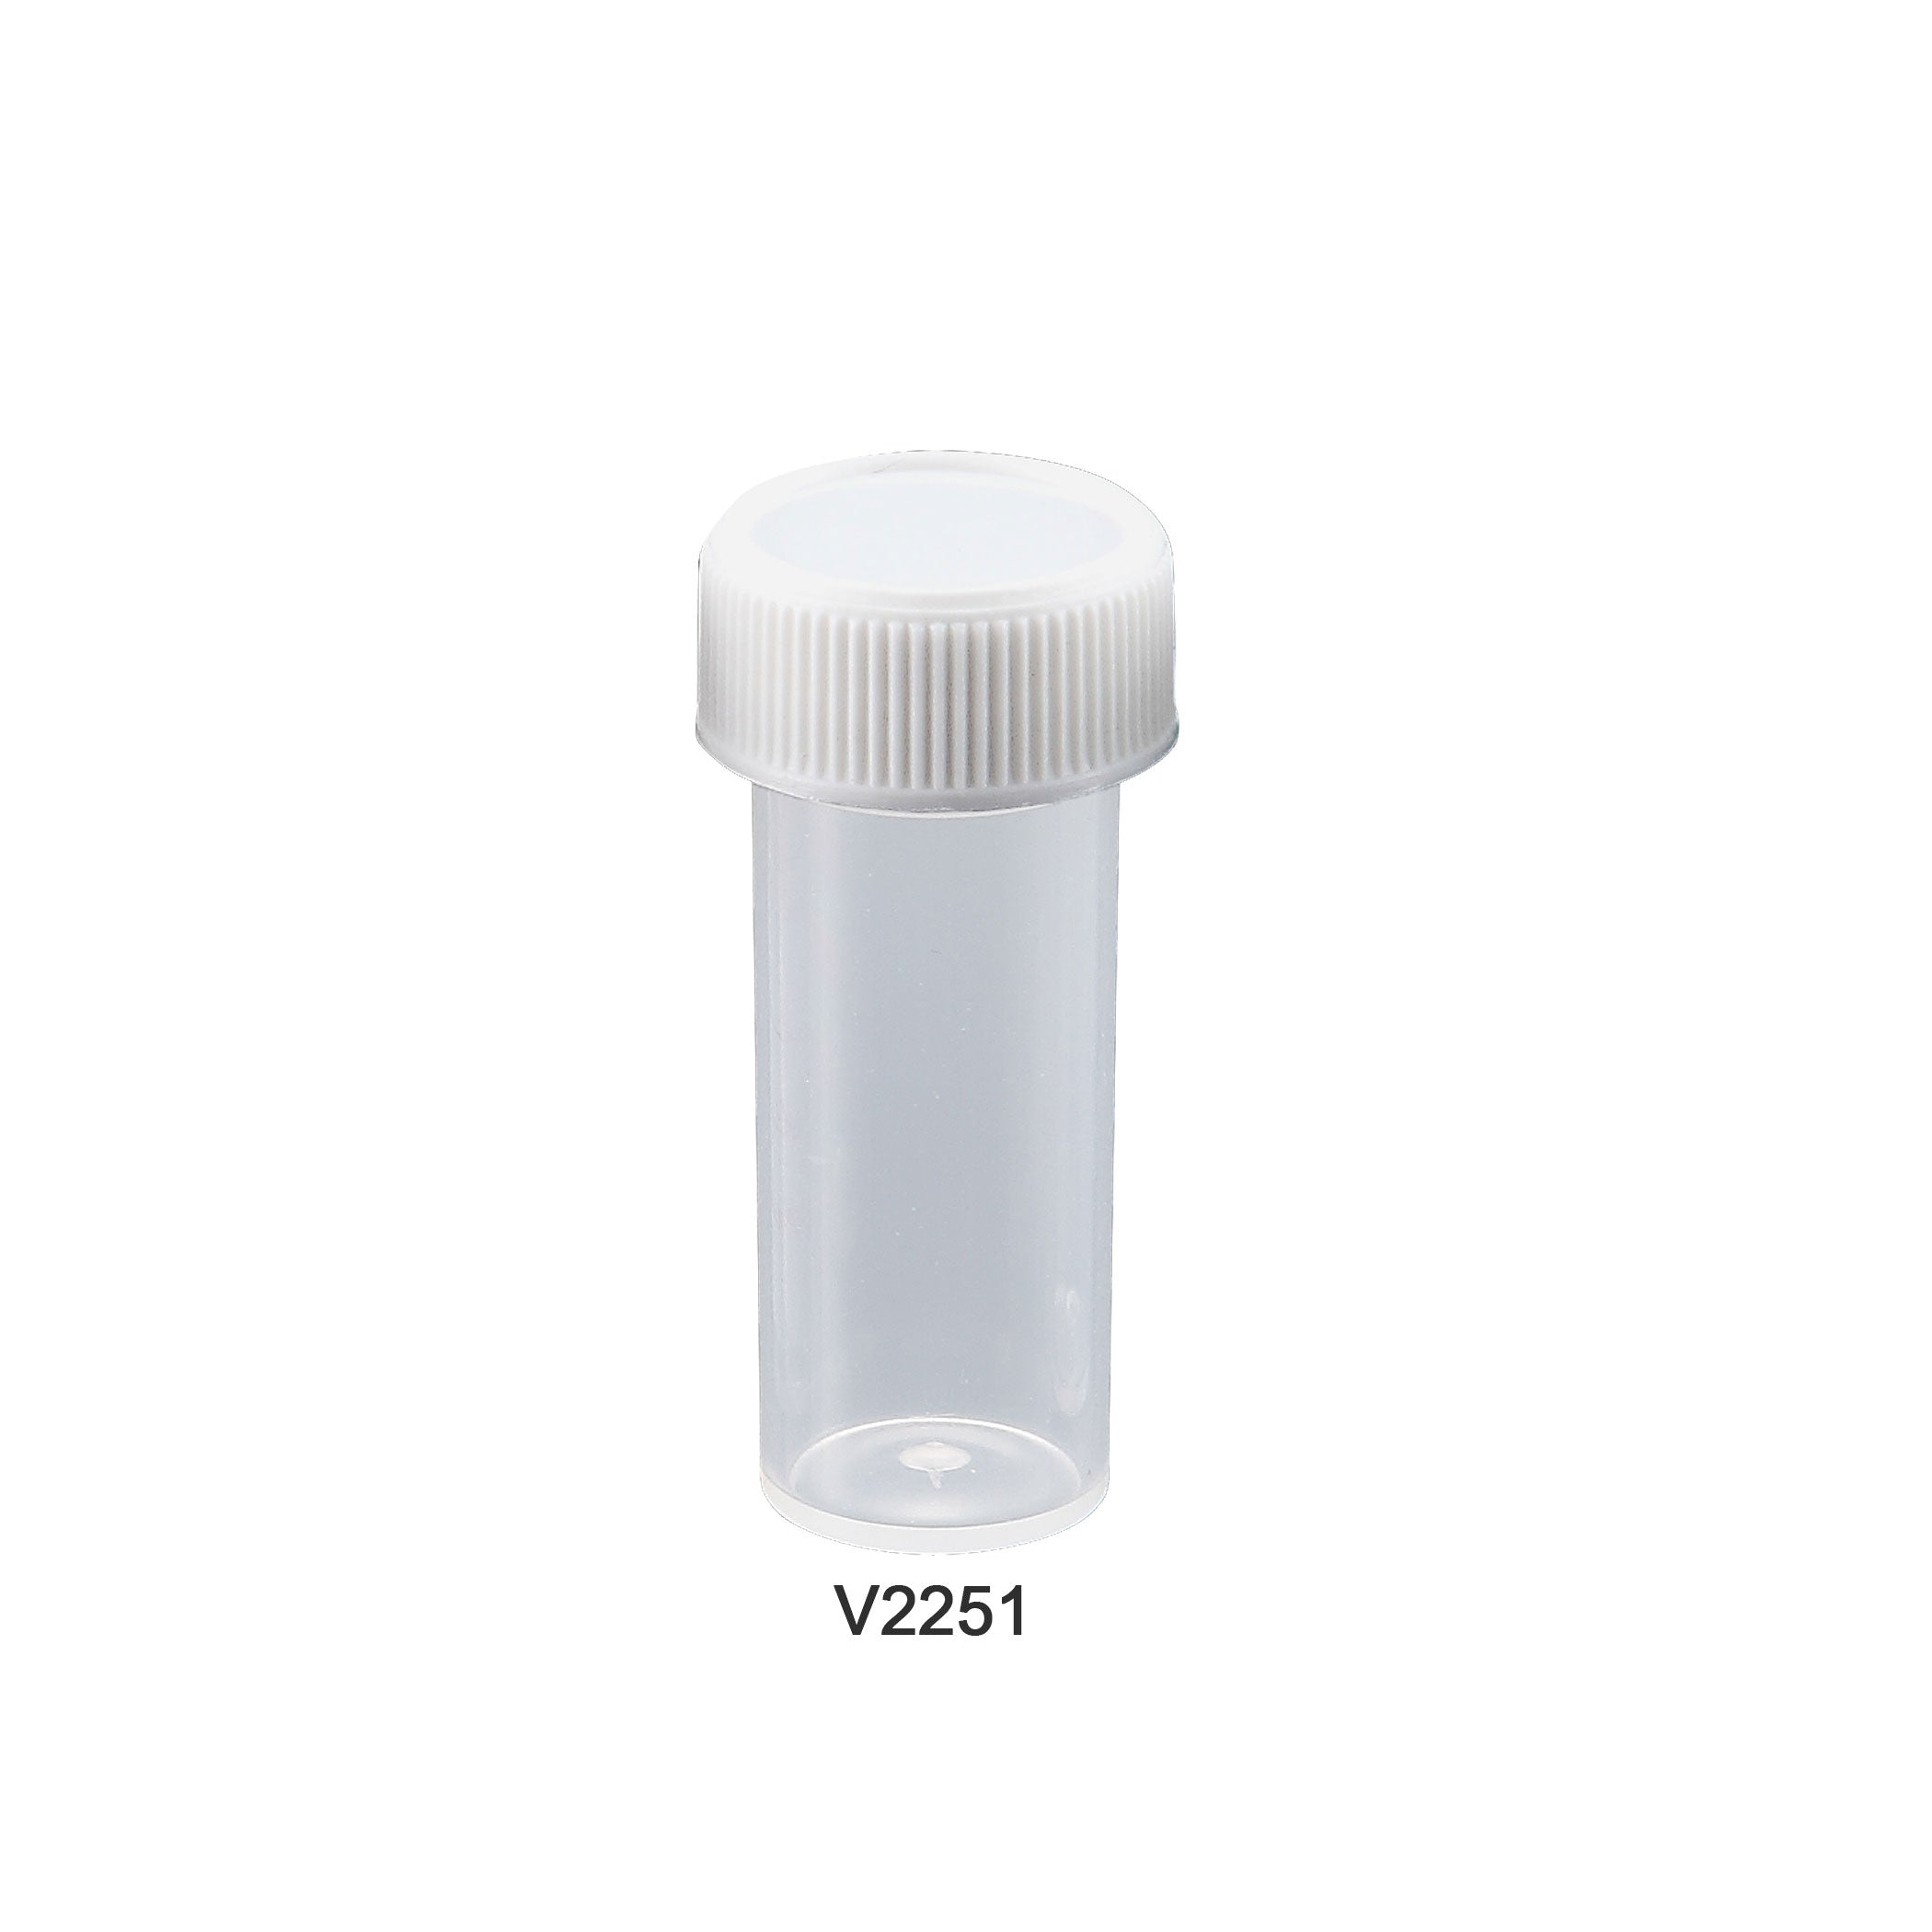 MTC Bio V2251, Specimen/Transport Vial, 17x50mm, 7ml, Pp, Non-Graduated, with Attached Screw-Cap, Non-Sterile, Ce, Non-Toxic, Bulk Pack of 700